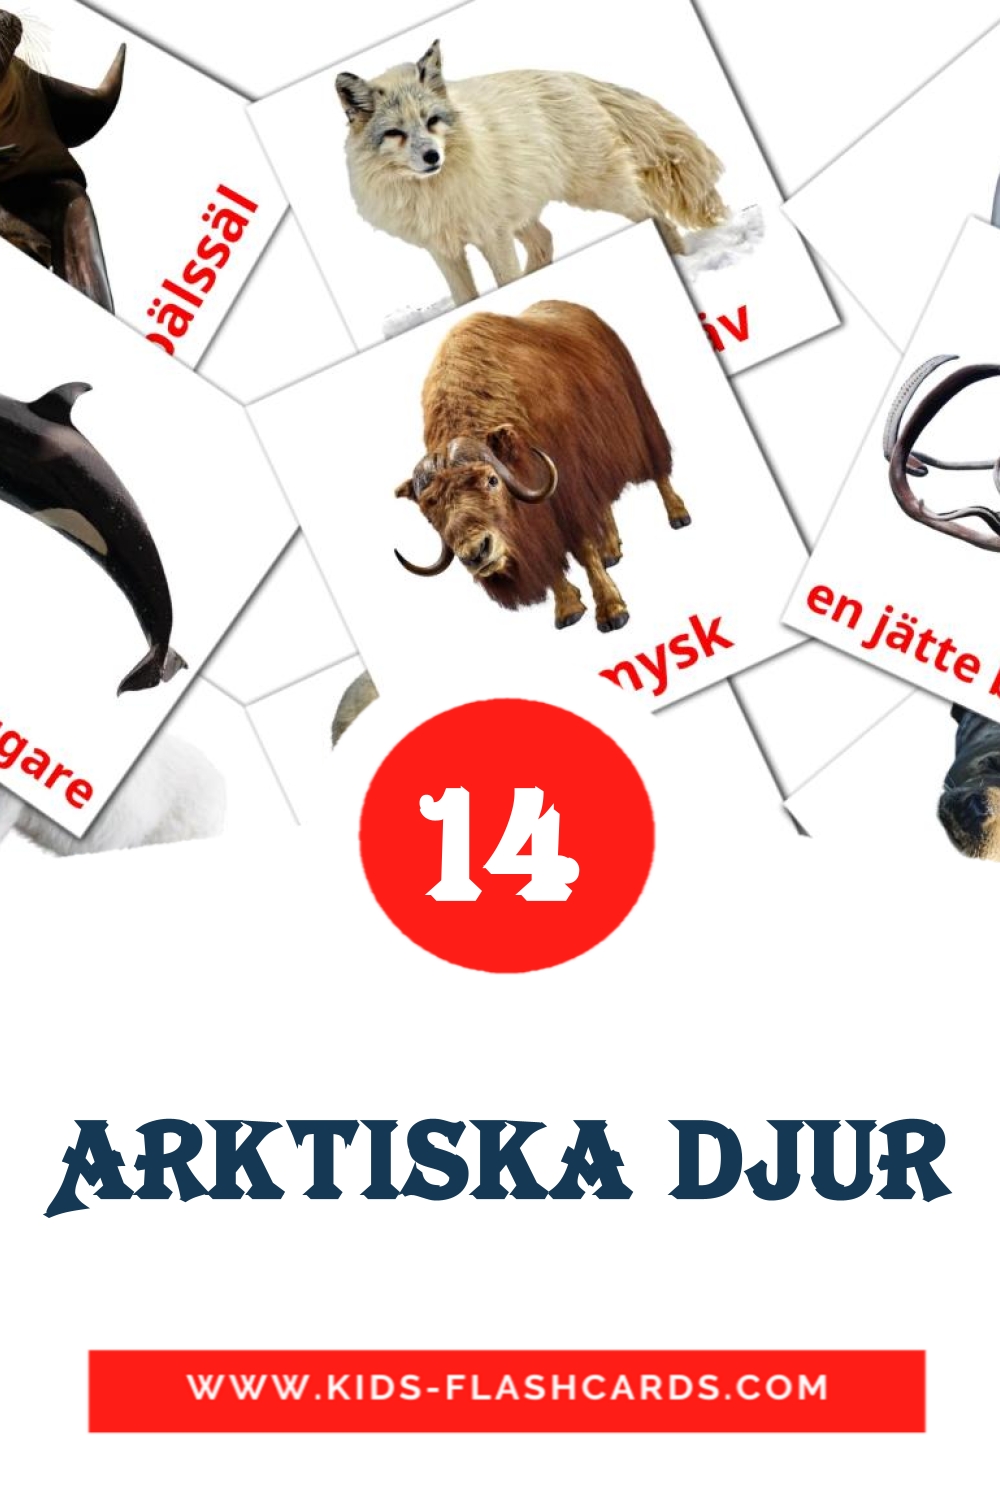 14 Arktiska djur Picture Cards for Kindergarden in swedish